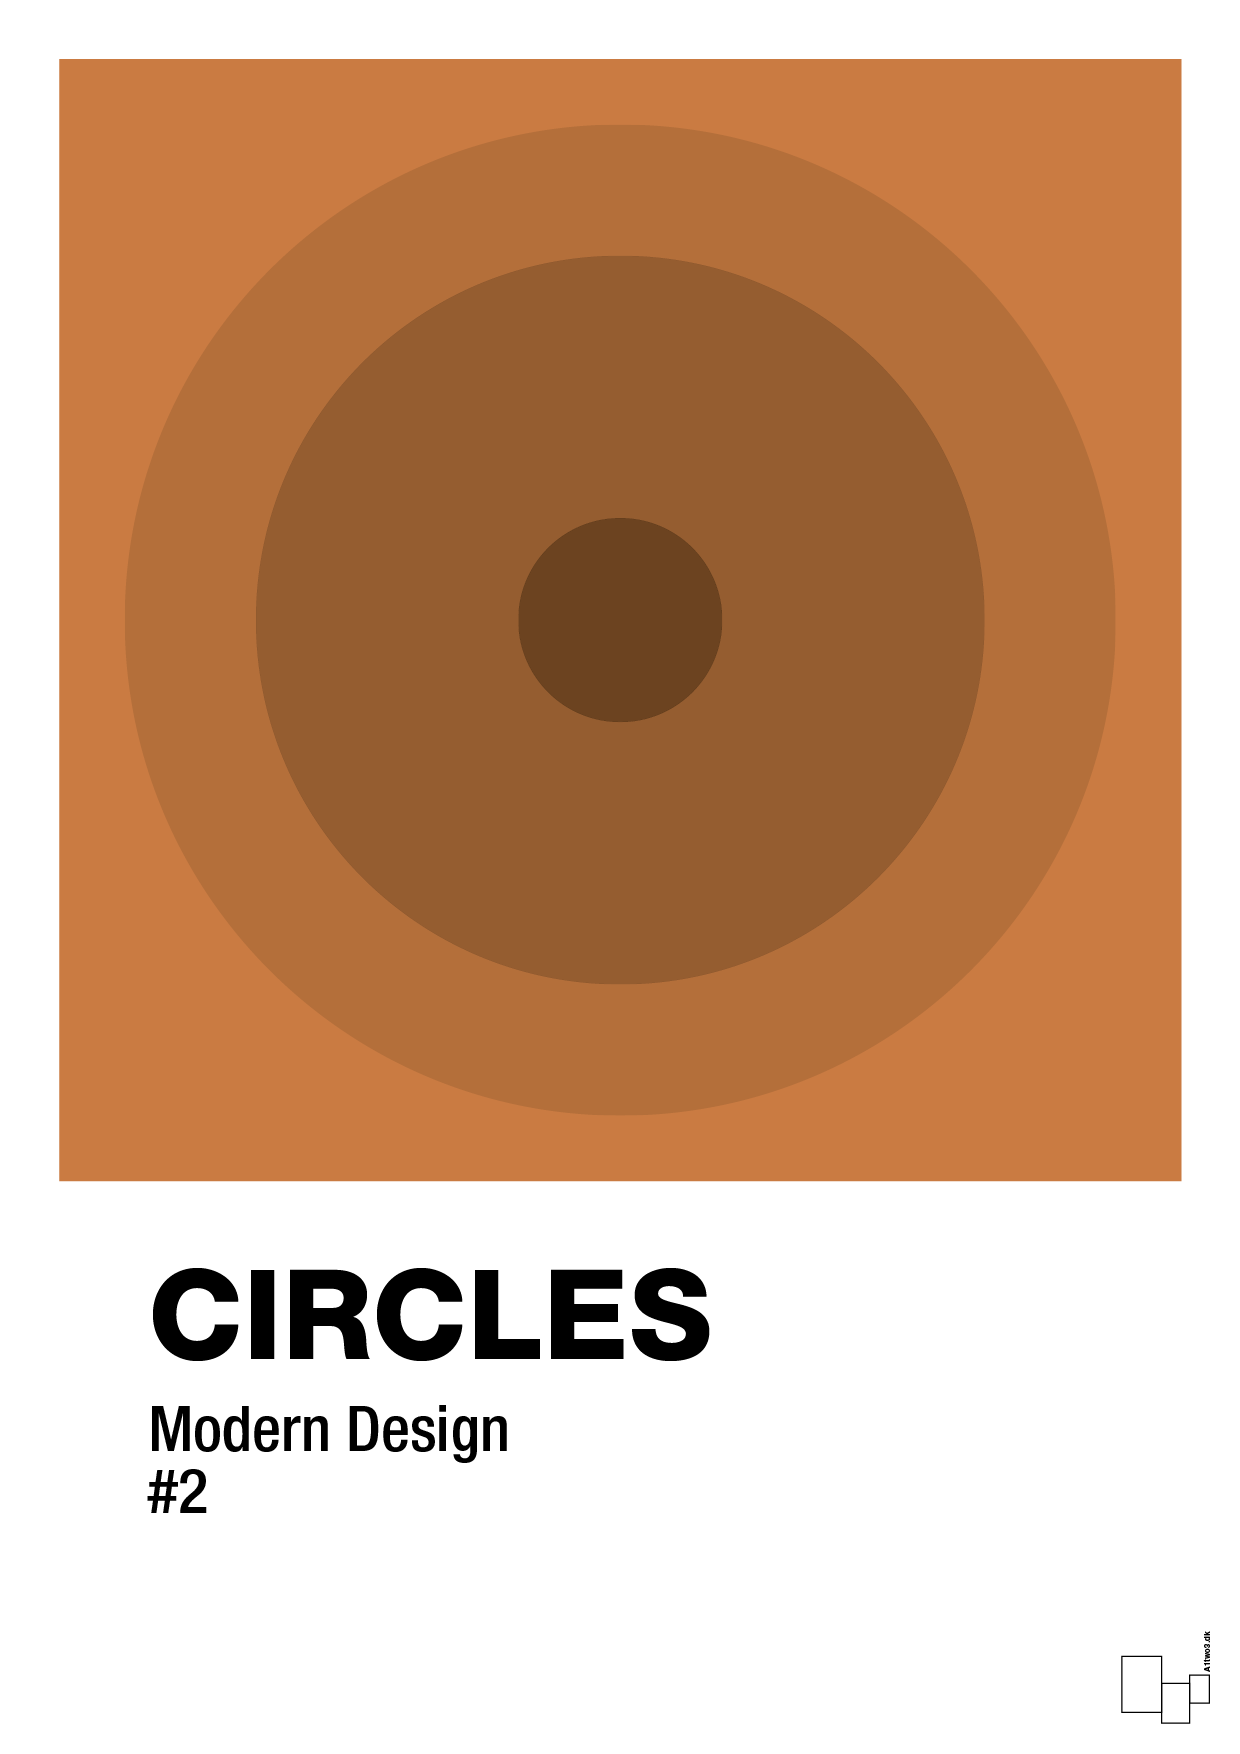 circles #2 - Plakat med Grafik i Rumba Orange